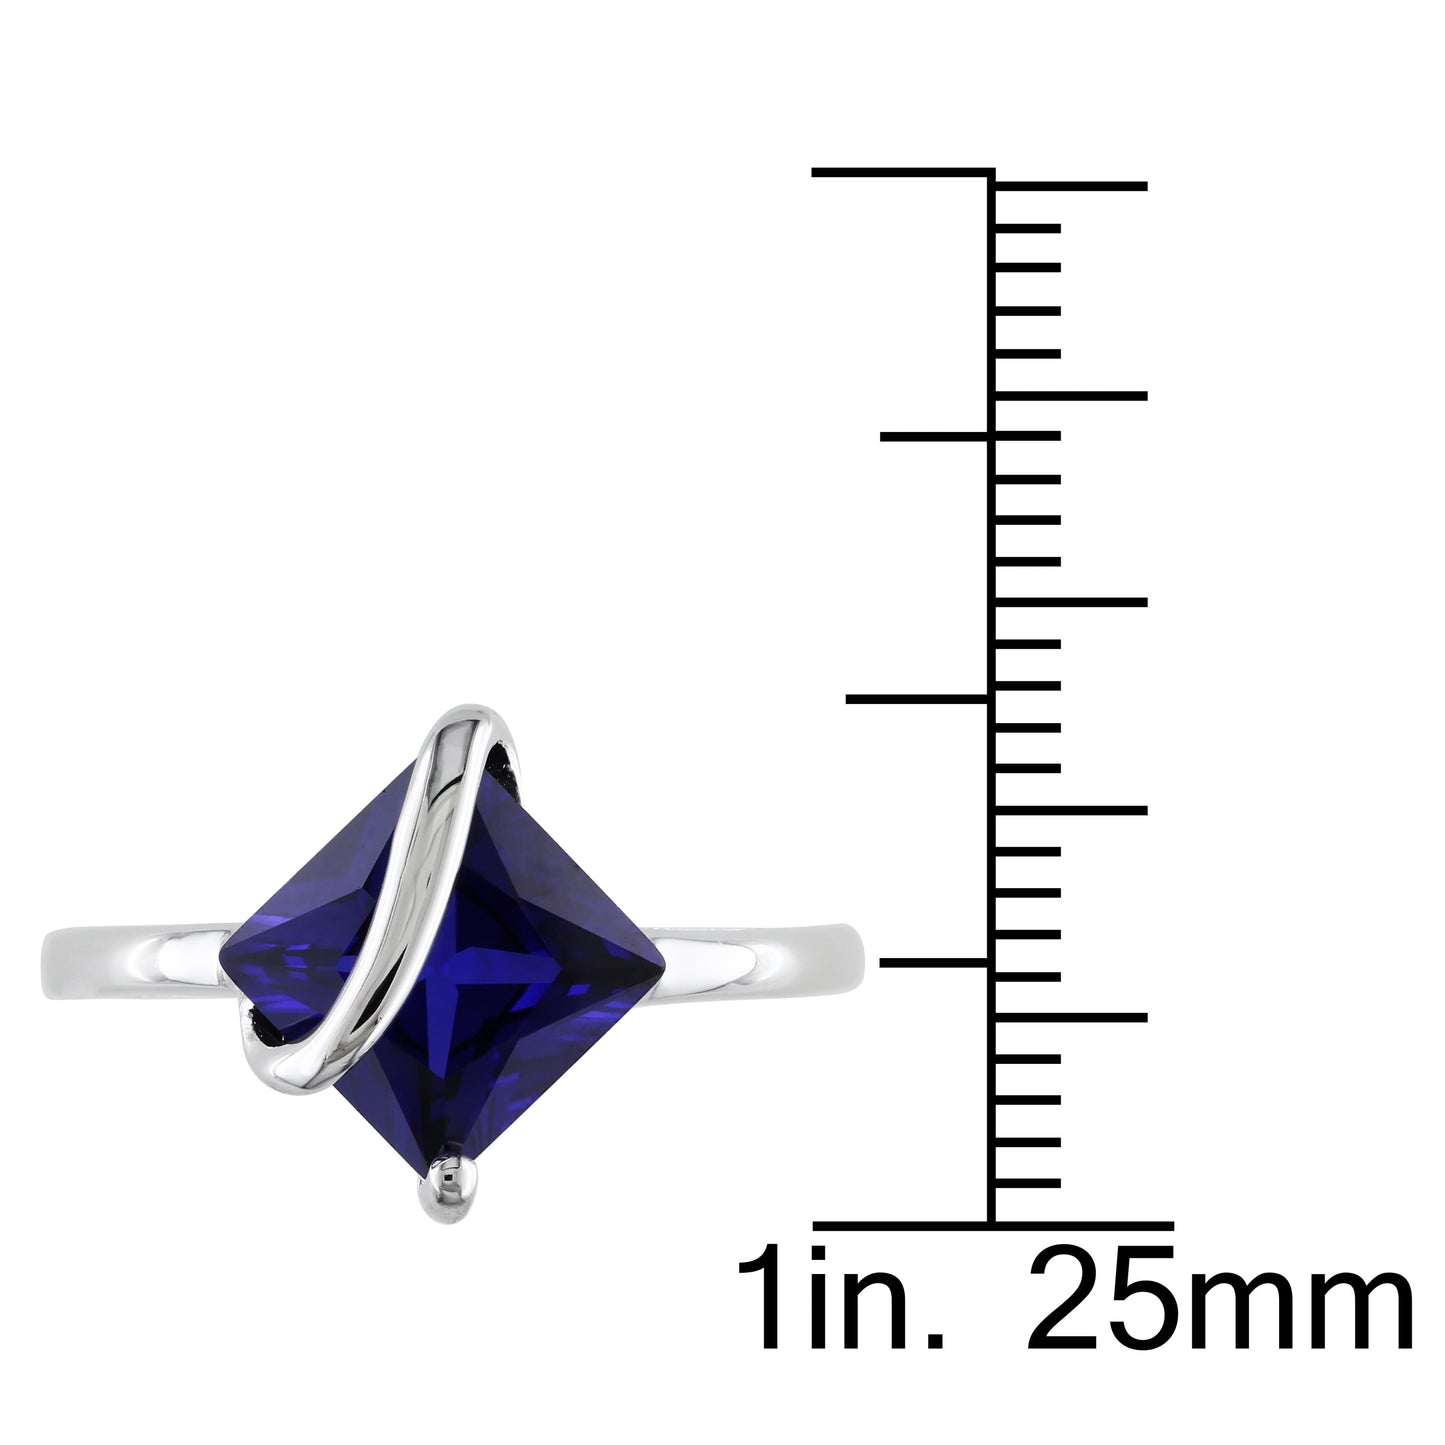 Sophia B 2 4/5ct Created Blue Sapphire Ring